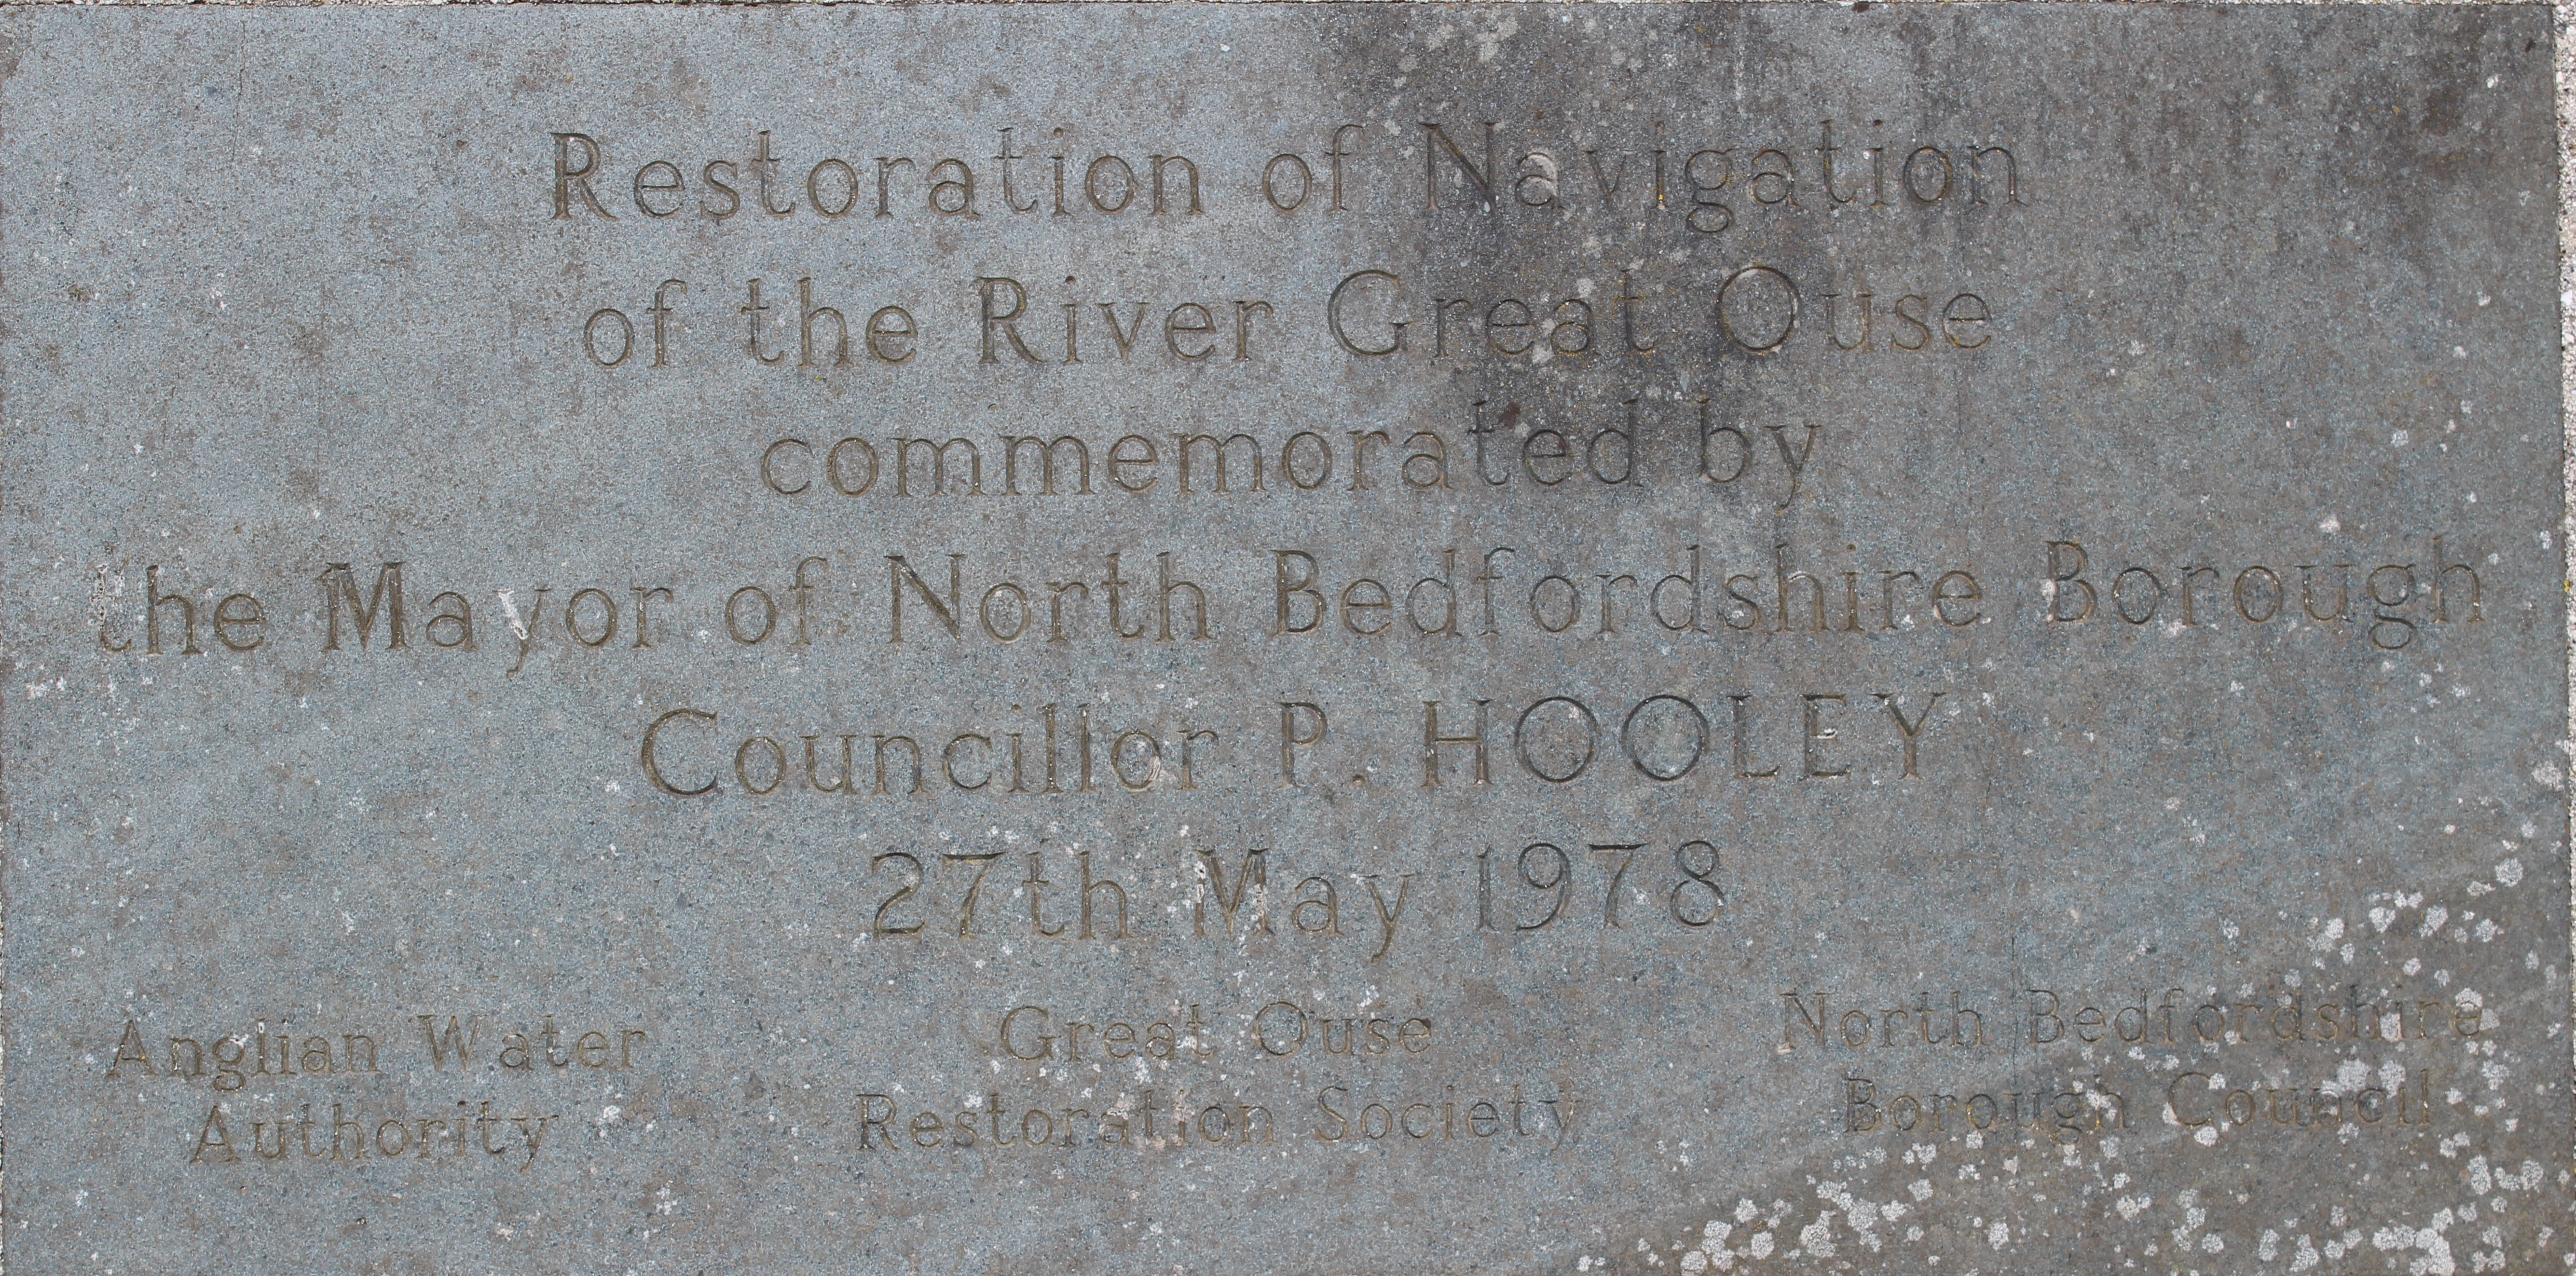 River Great Ouse Navigation Lock commemorative plaque